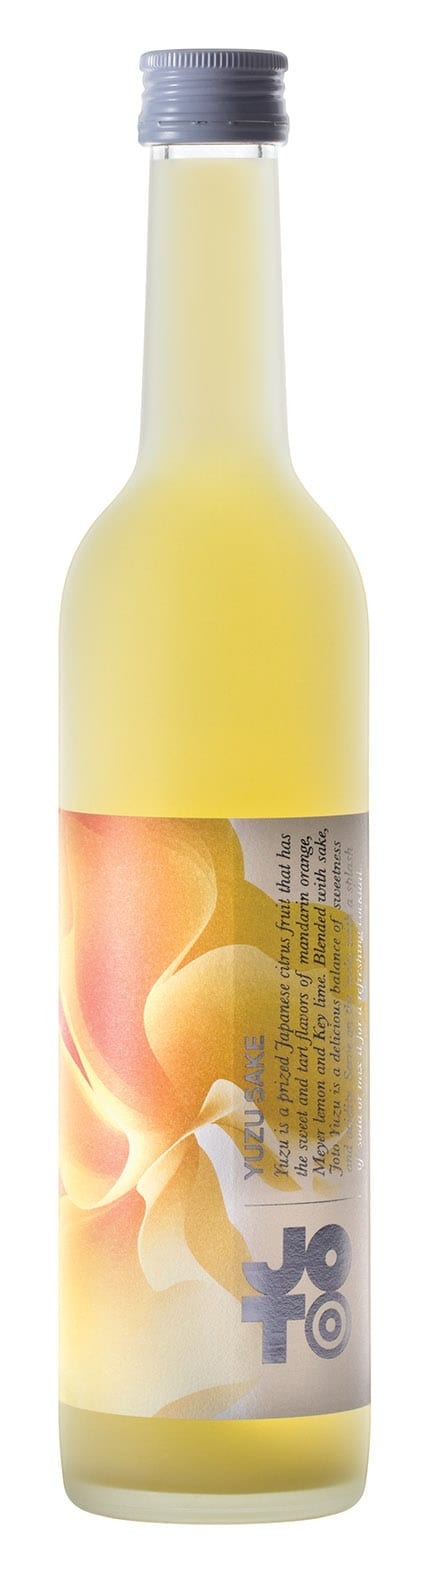 Bottle of Joto Sake - Yuzu, "The Citrus One"